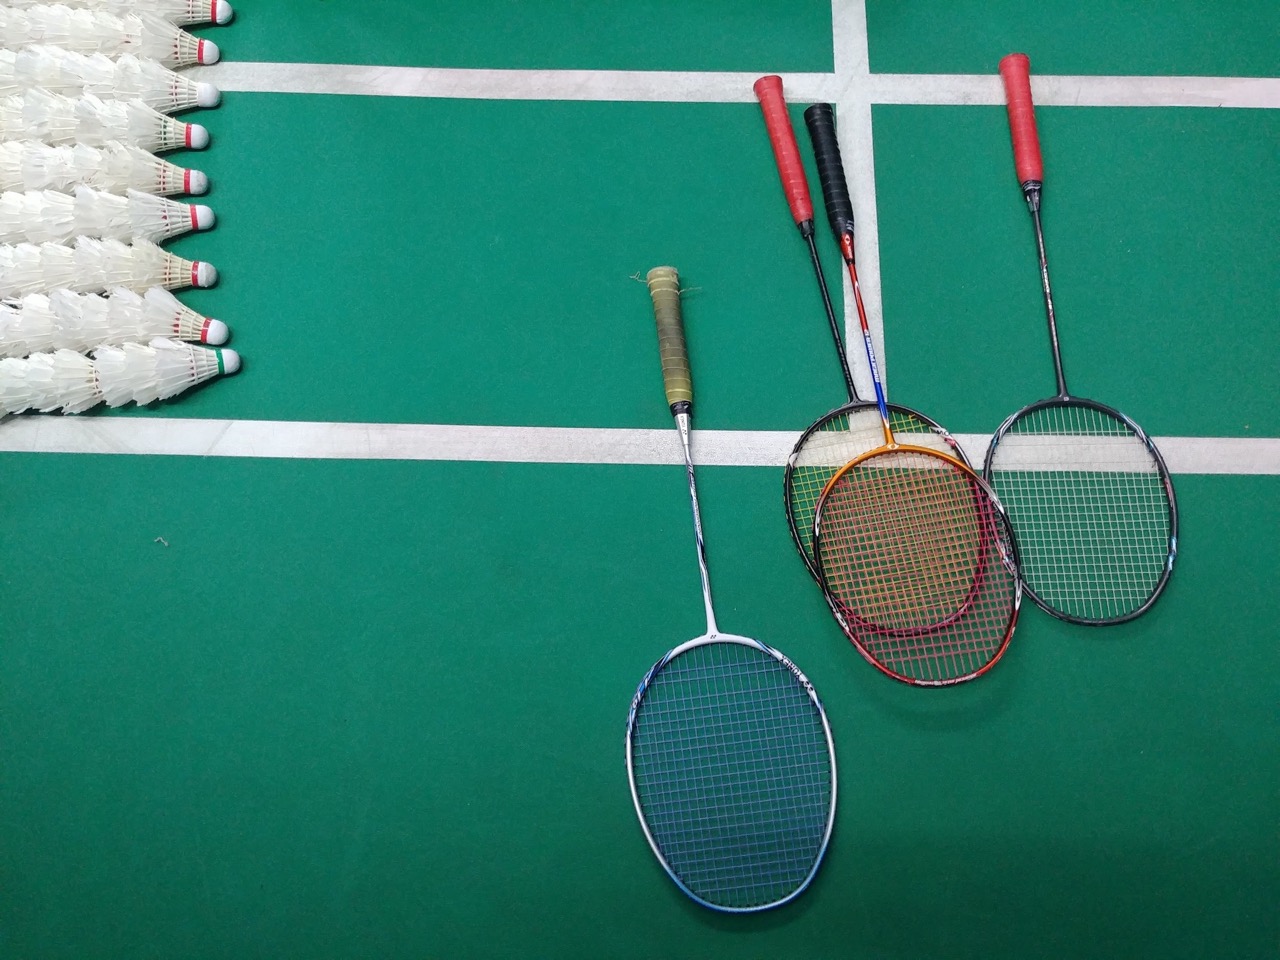 Badminton Set Review: A Comprehensive Analysis